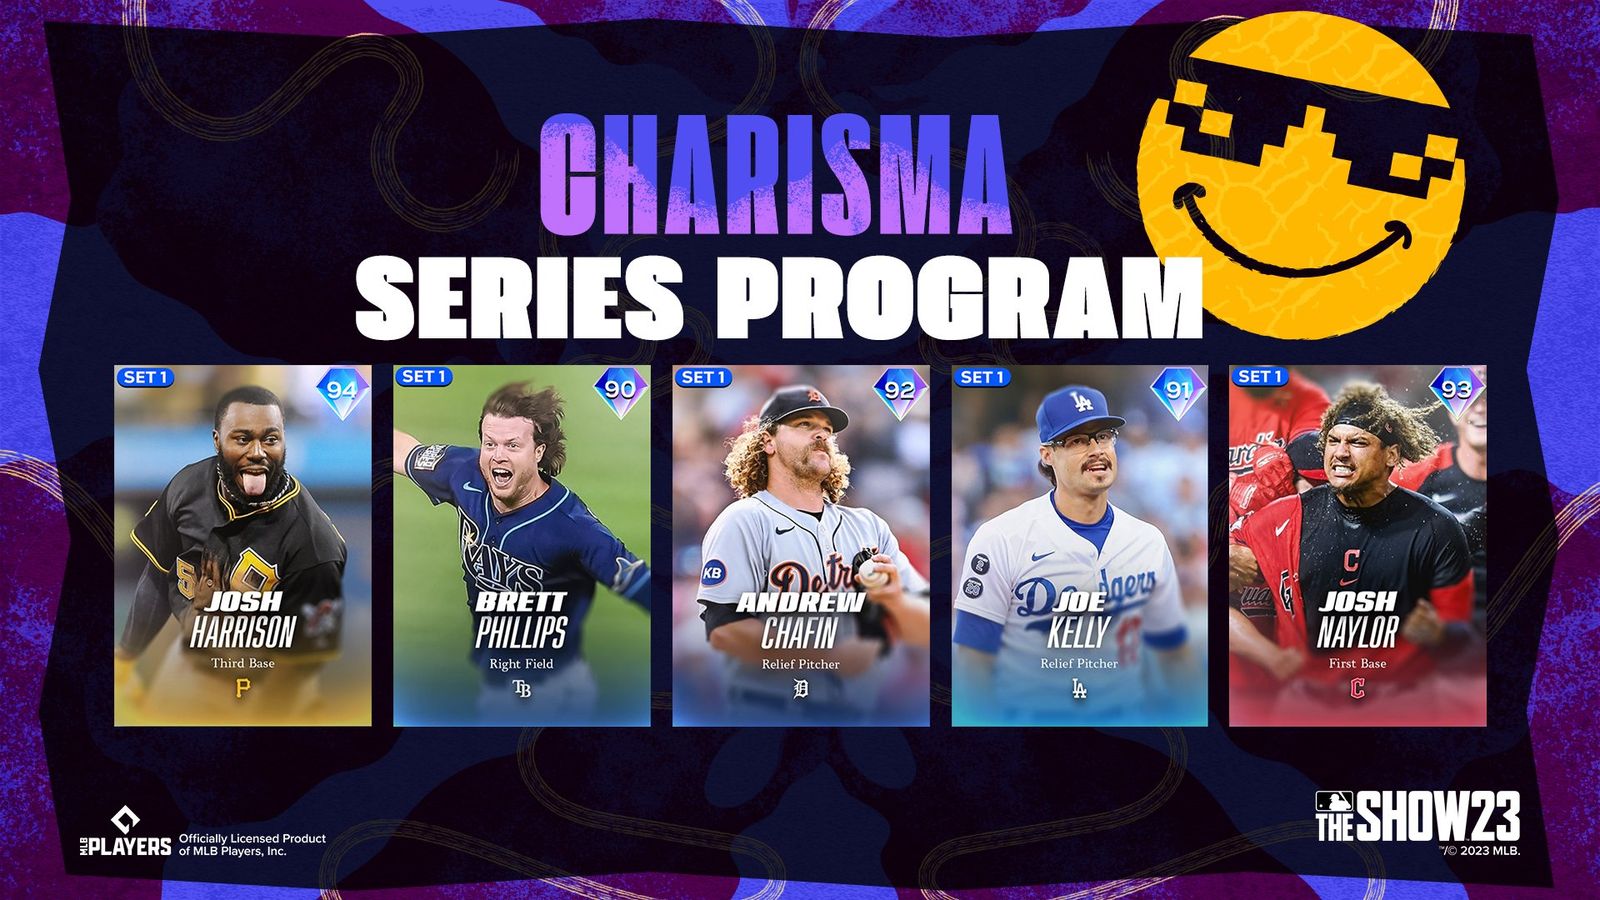 mlb-the-show-23-charisma-series-program 